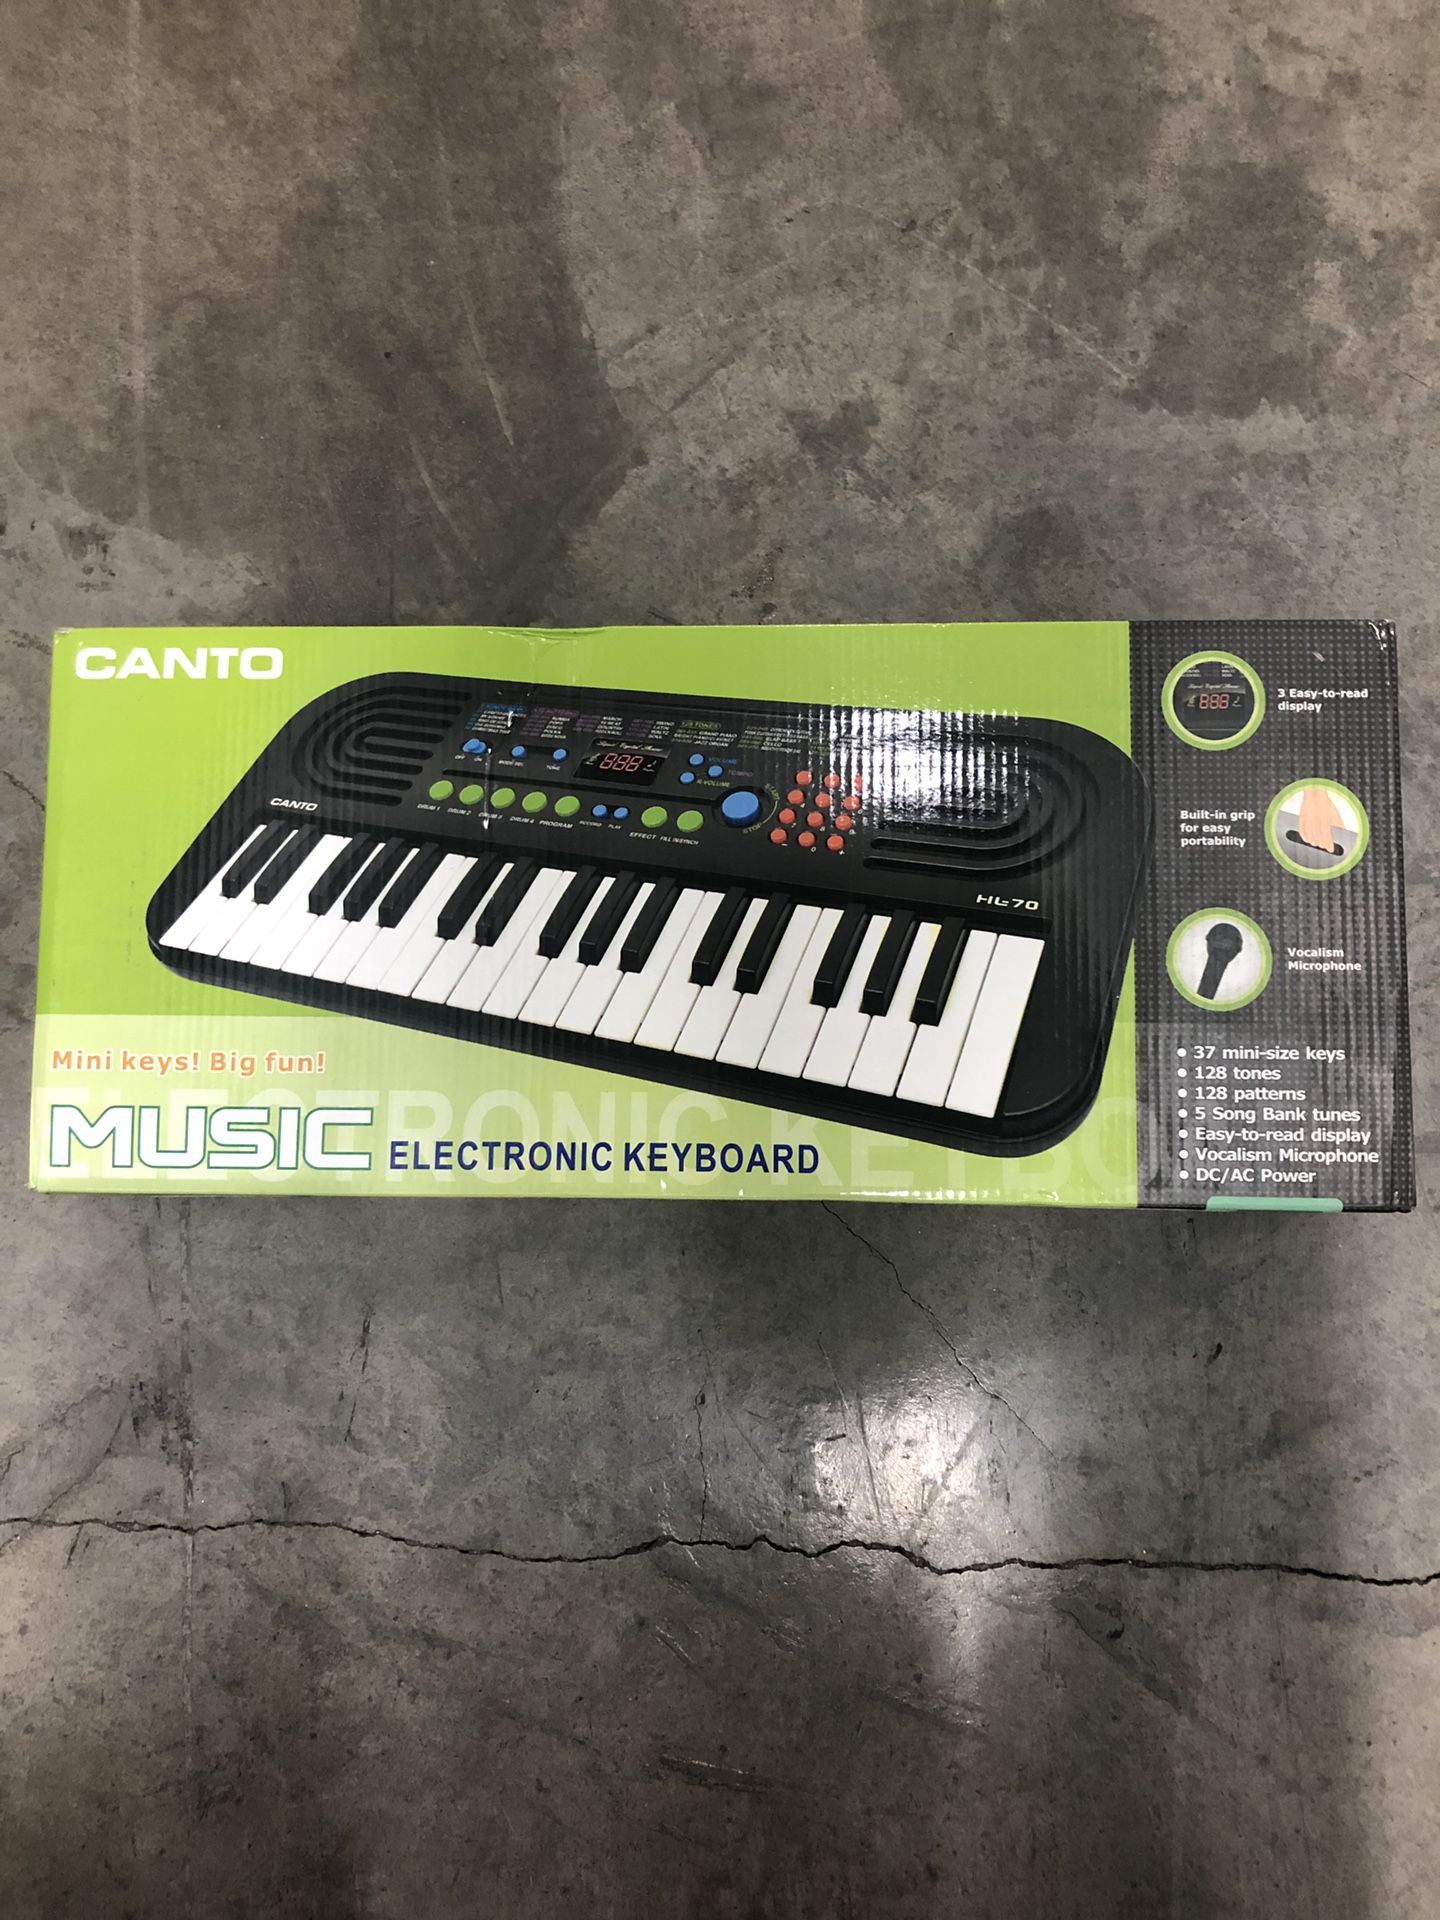 Canto Music Electronic Keyboard